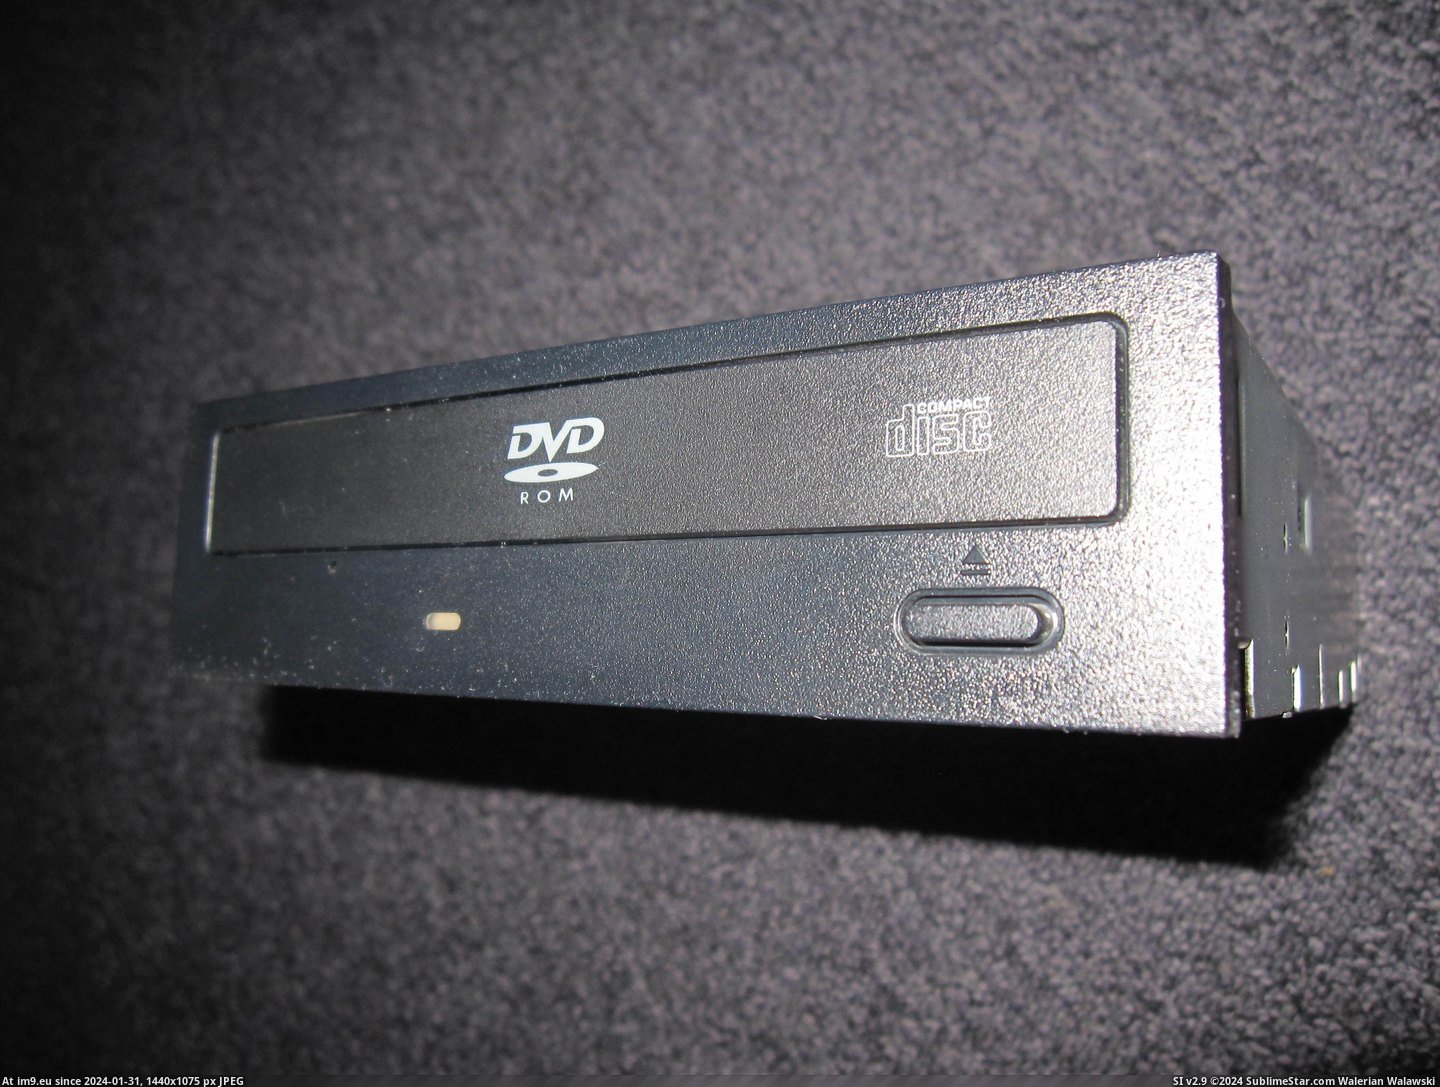 #Rom #Liteon #Sohd #Dvd HP Liteon SOHD-167T DVD ROM IMG_1374 Pic. (Image of album DVD-ROM))